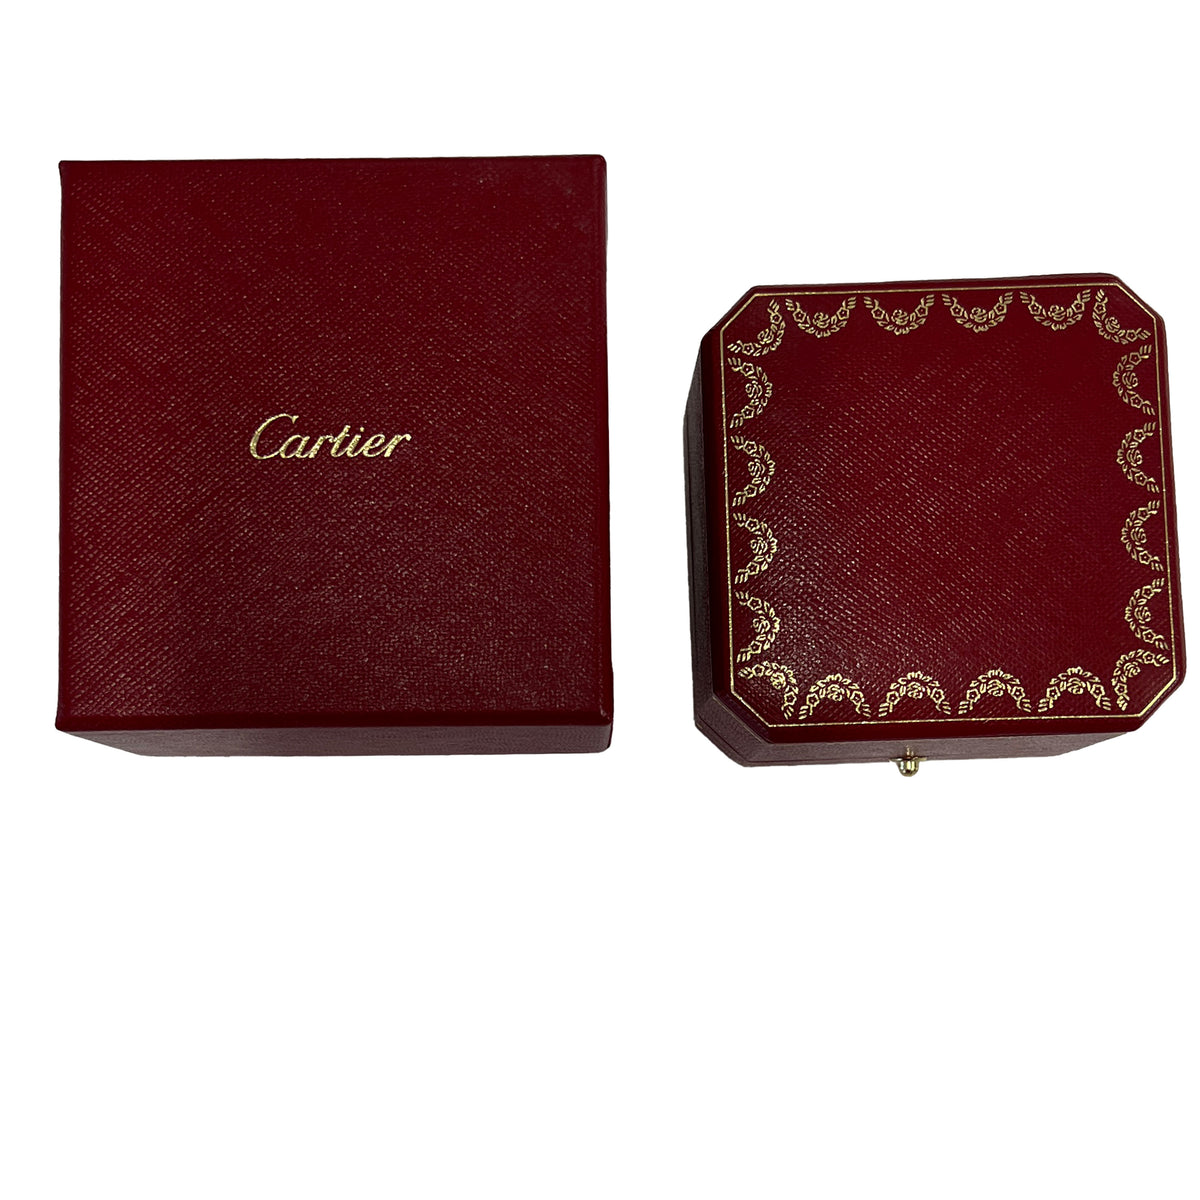 Cartier Agrafe Diamond Ring in 18k Rose Gold 0.03 CTW